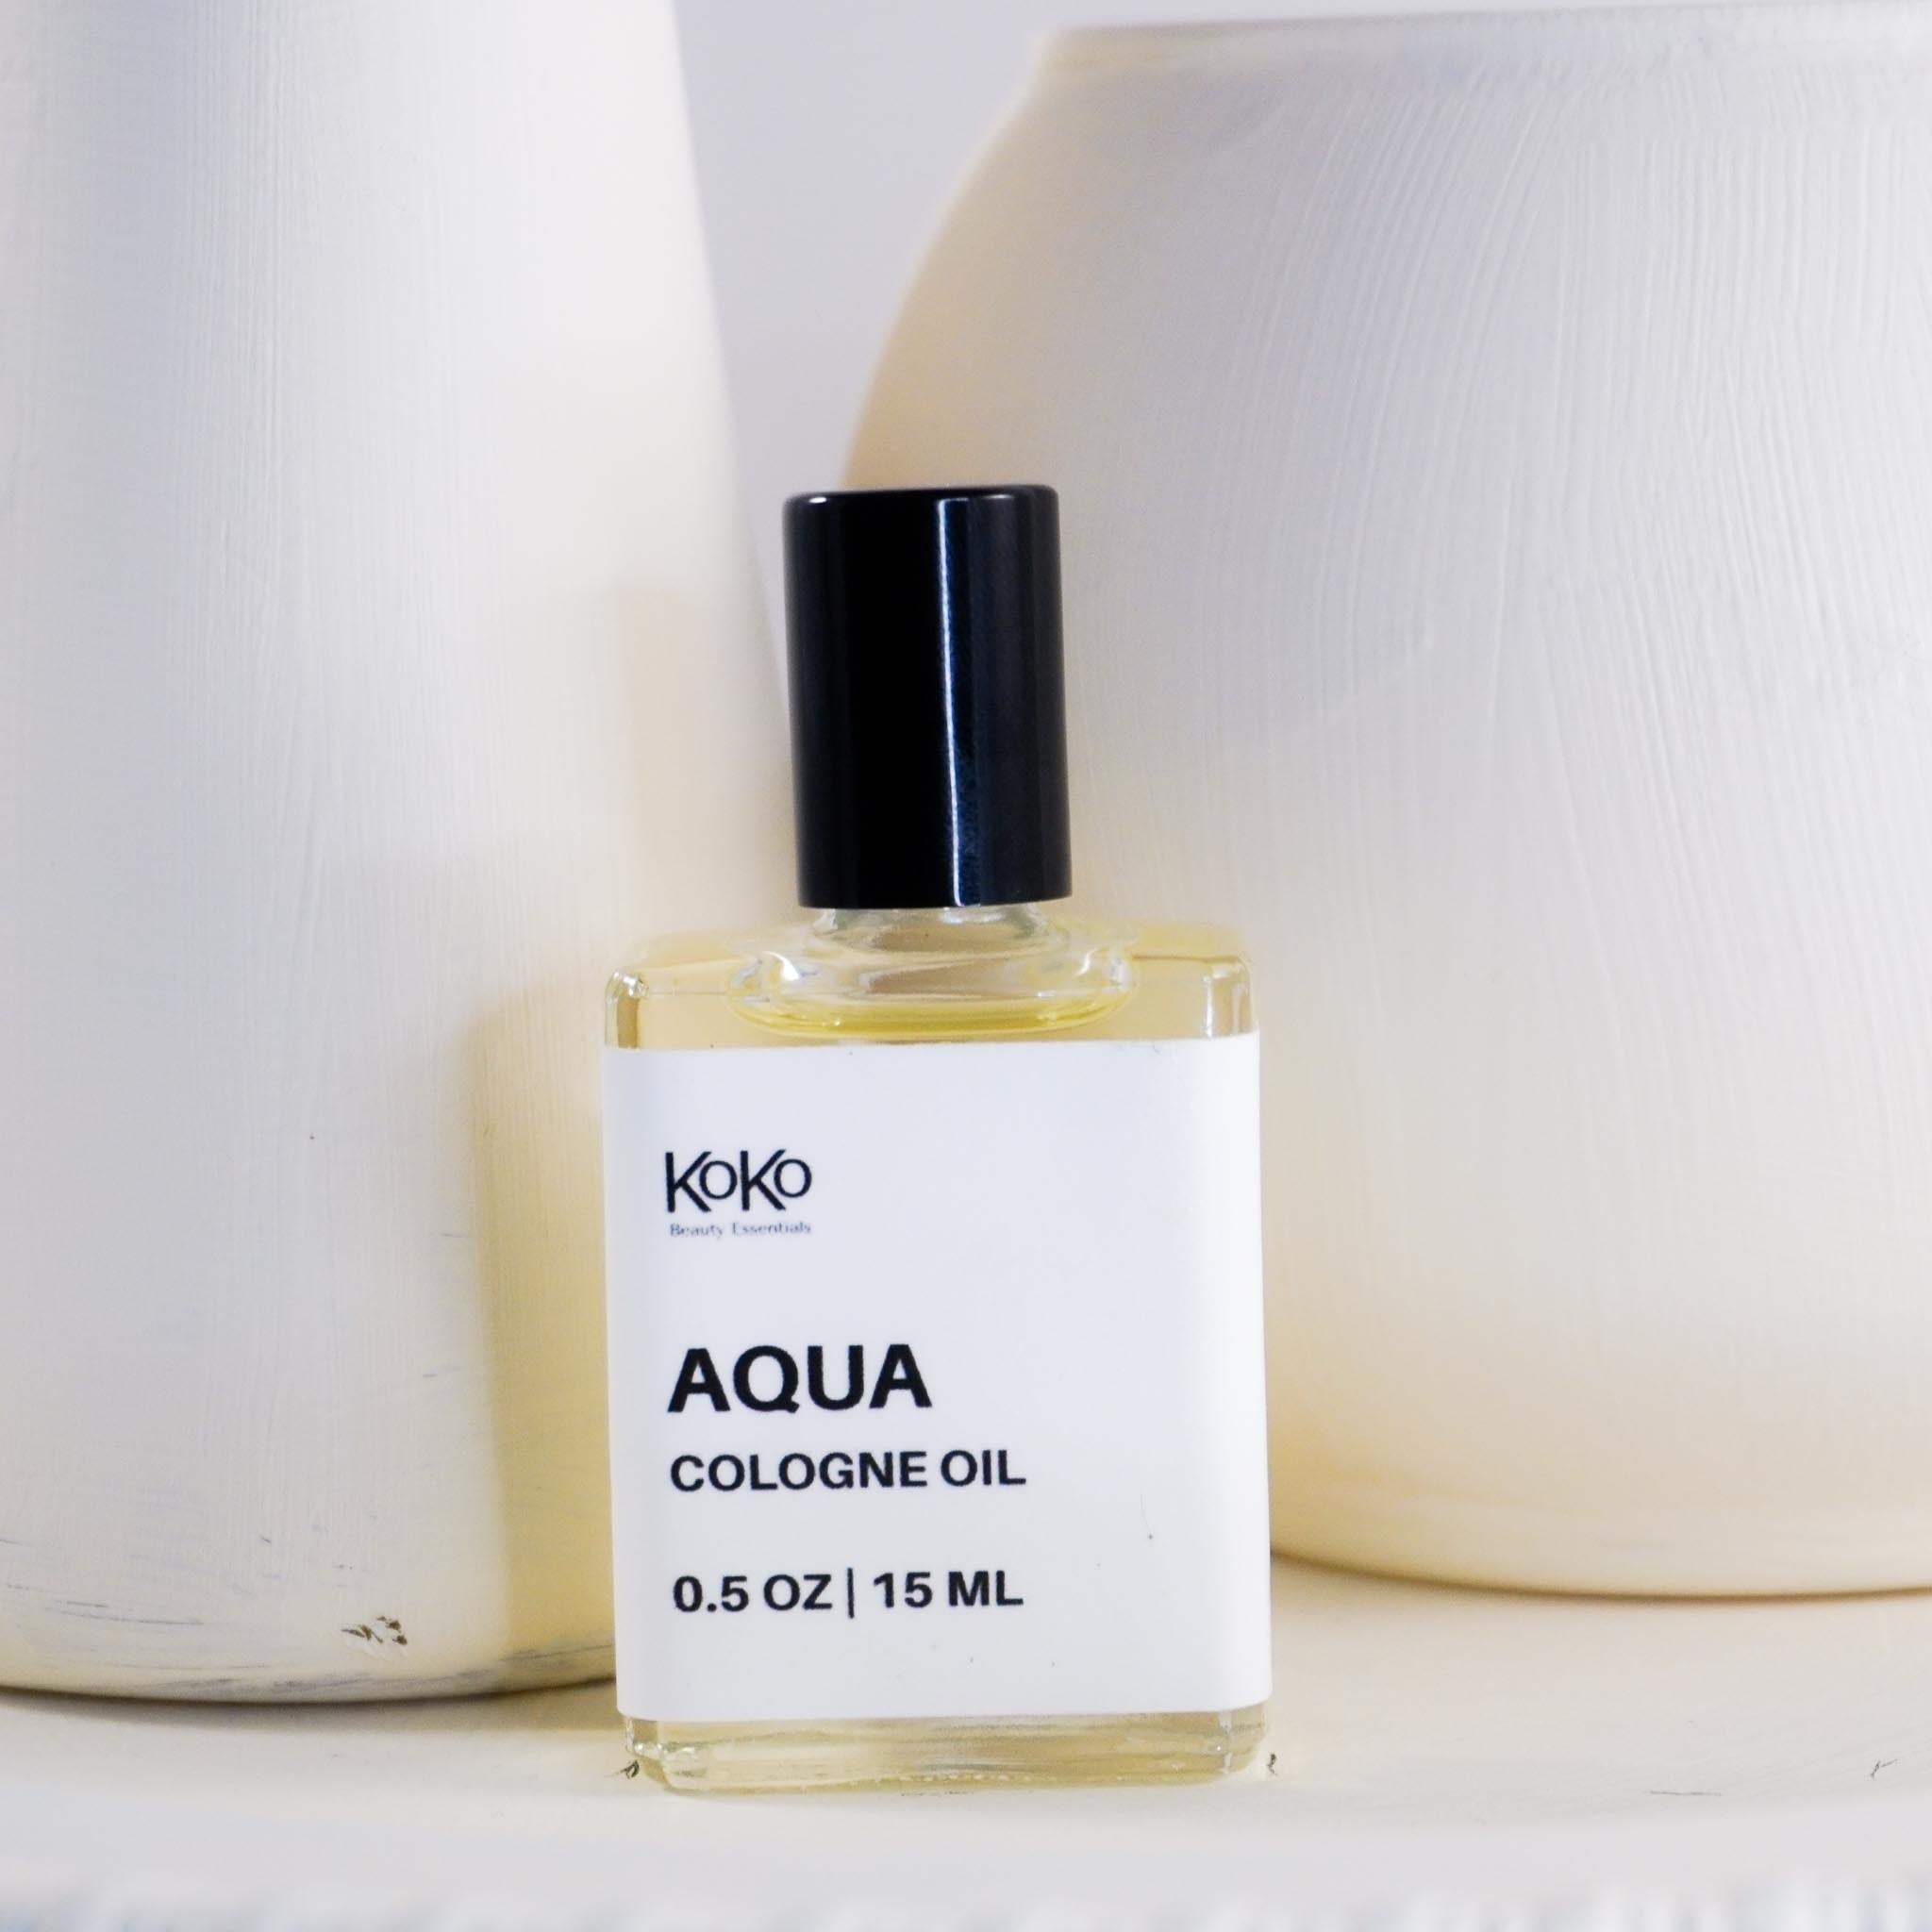 Aqua Cologne Oil